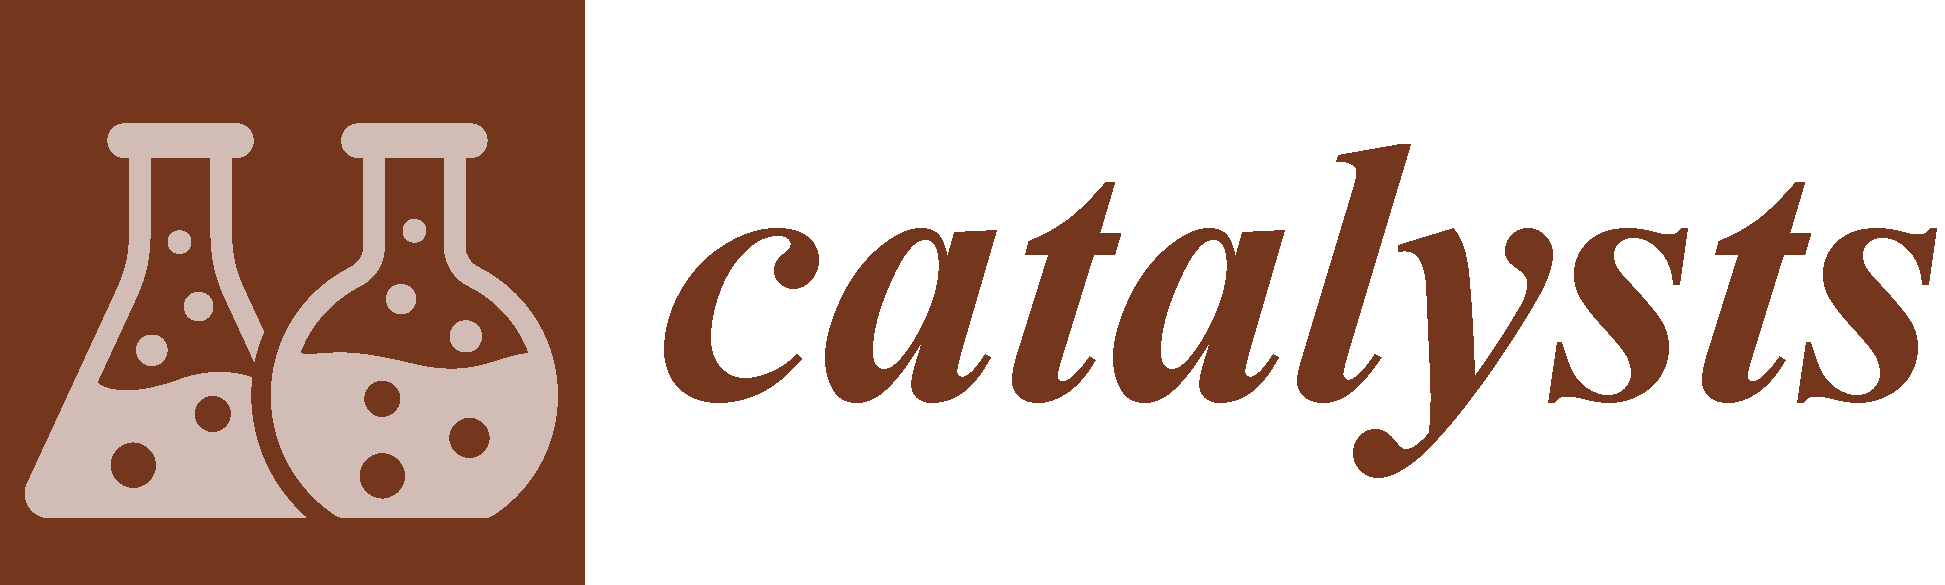 catalysts logo